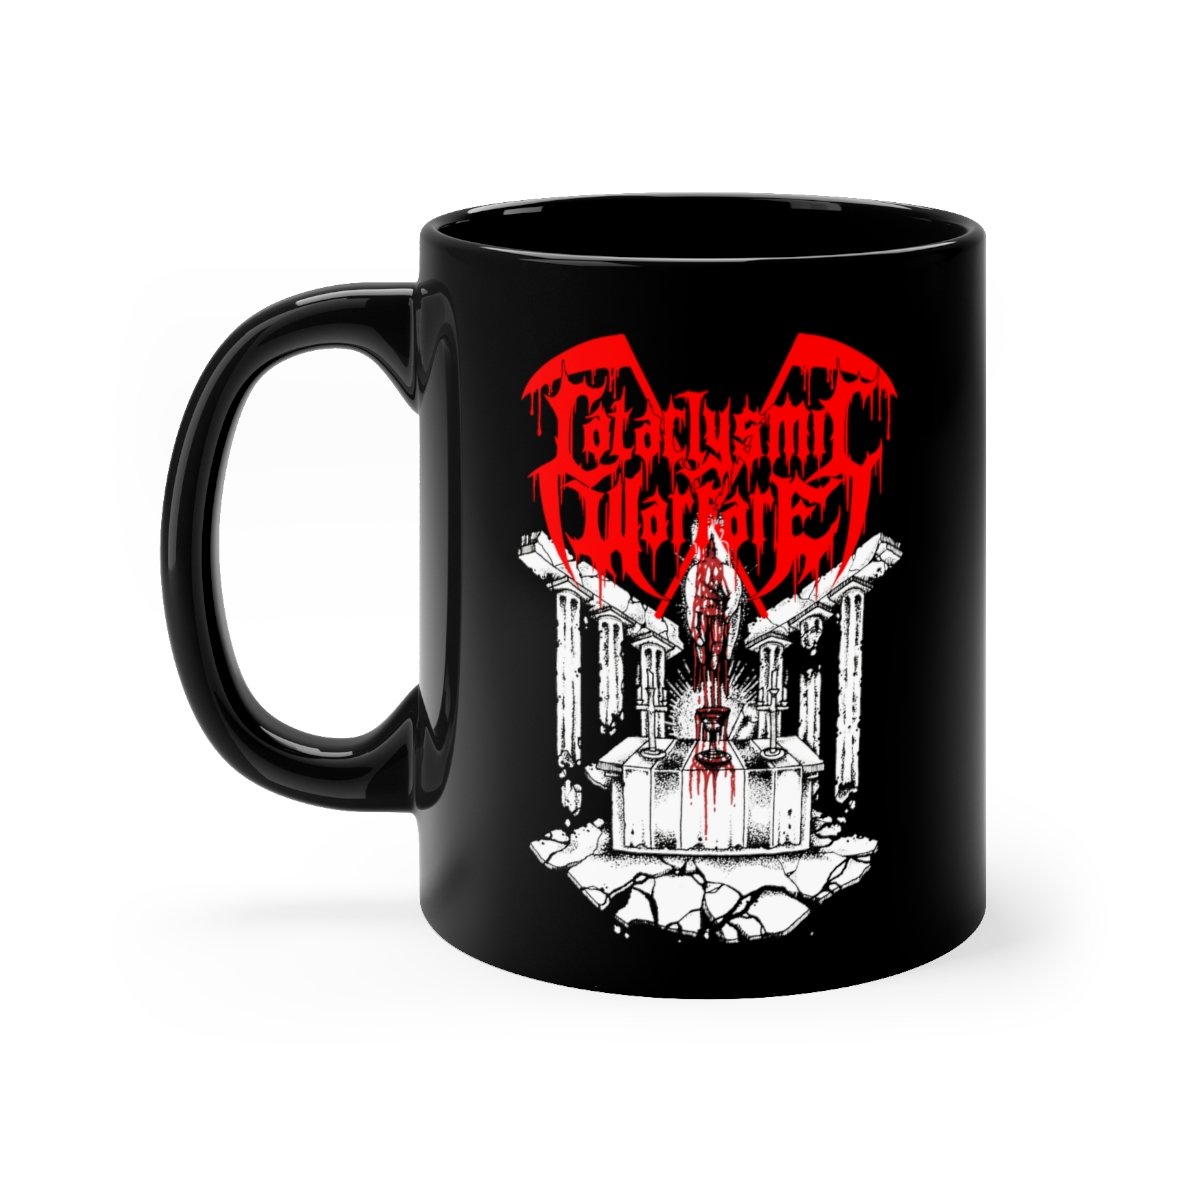 Cataclysmic Warfare – Drink The Blood 11oz Black mug